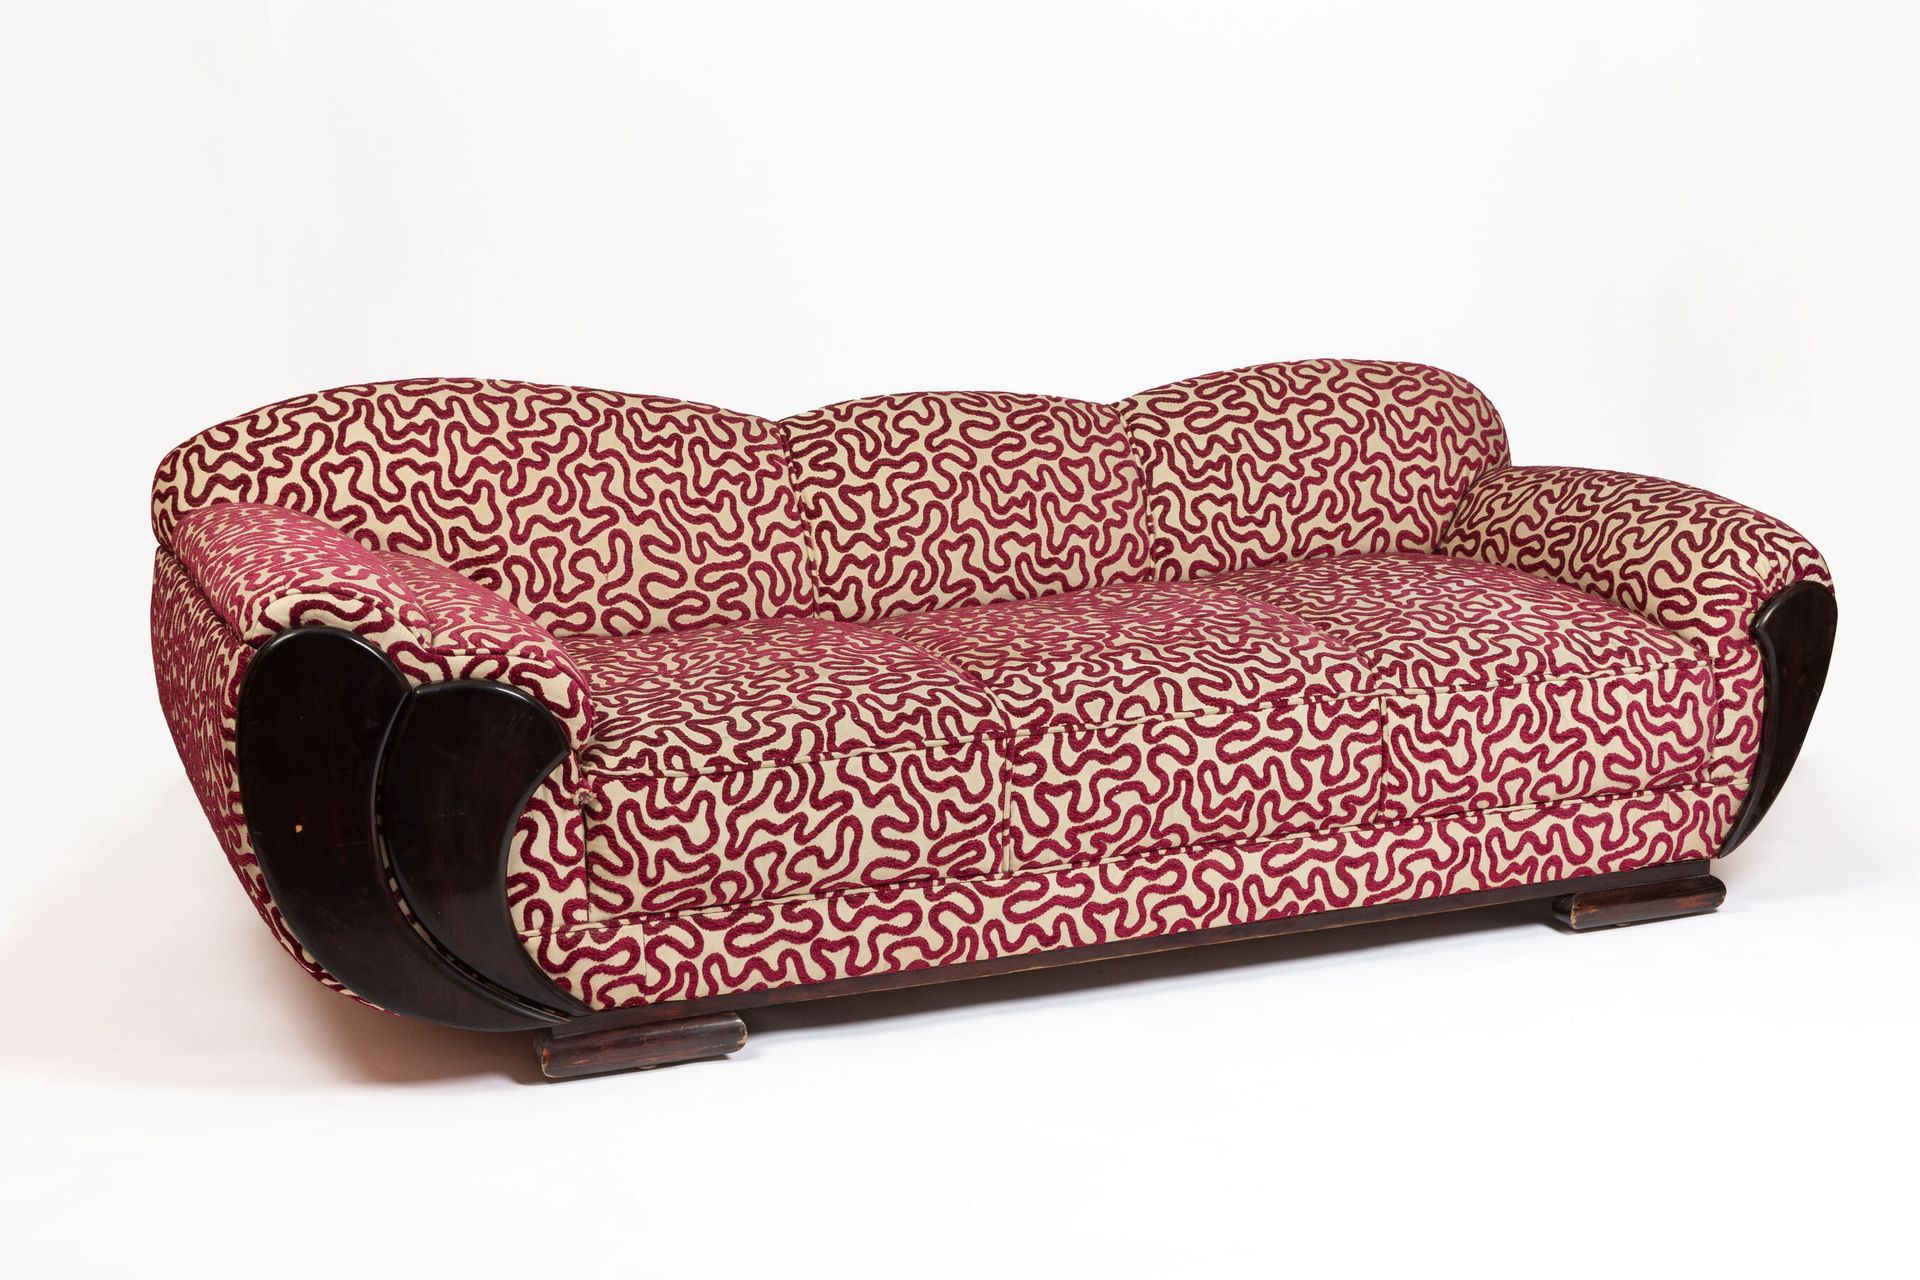 Null 清漆木质沙发，床头板打开后形成一个杂志架。
装饰艺术时期。
紫色和米色的天鹅绒的软垫，有波浪形的装饰。
高_73厘米，宽_213厘米，长_88厘米，有&hellip;